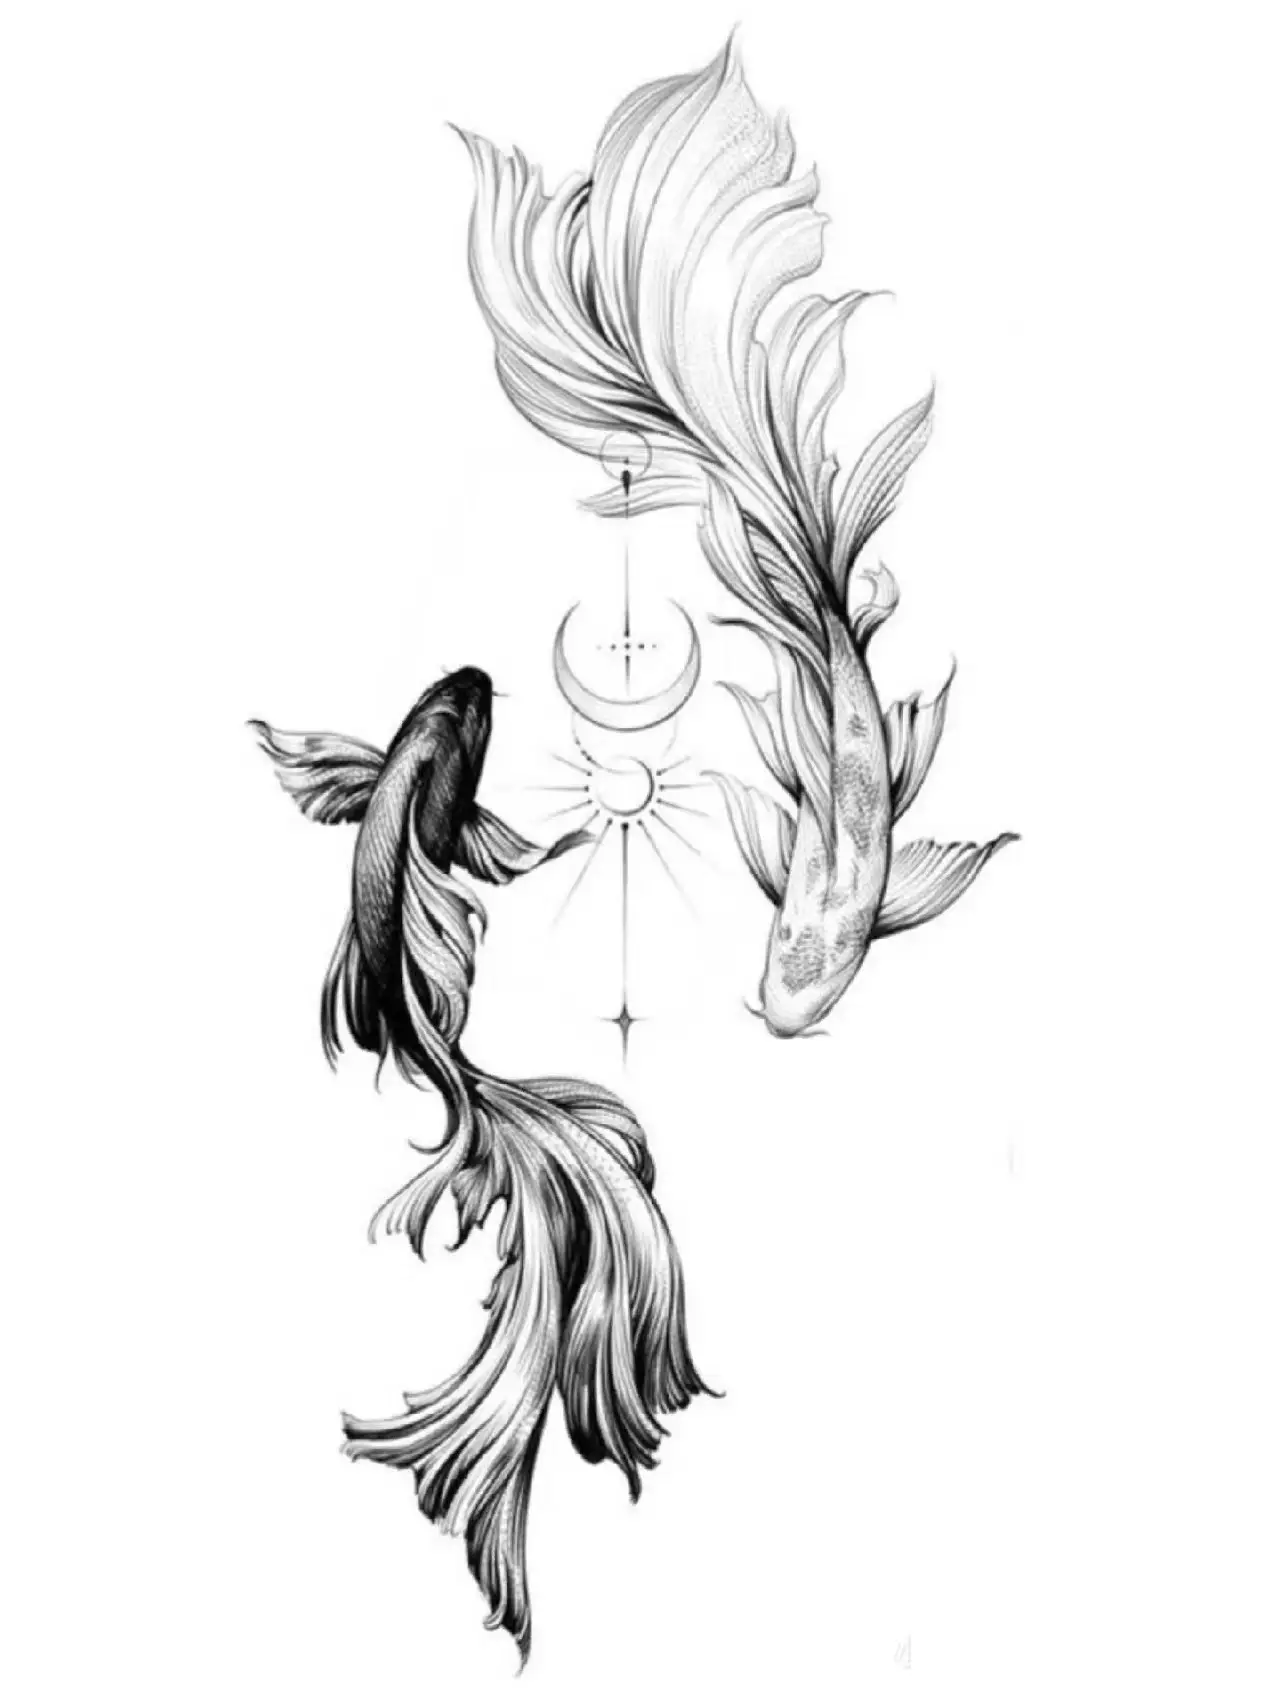 Koi Fish Yin Yang Tattoo: What Does It Mean? - Sunica Design